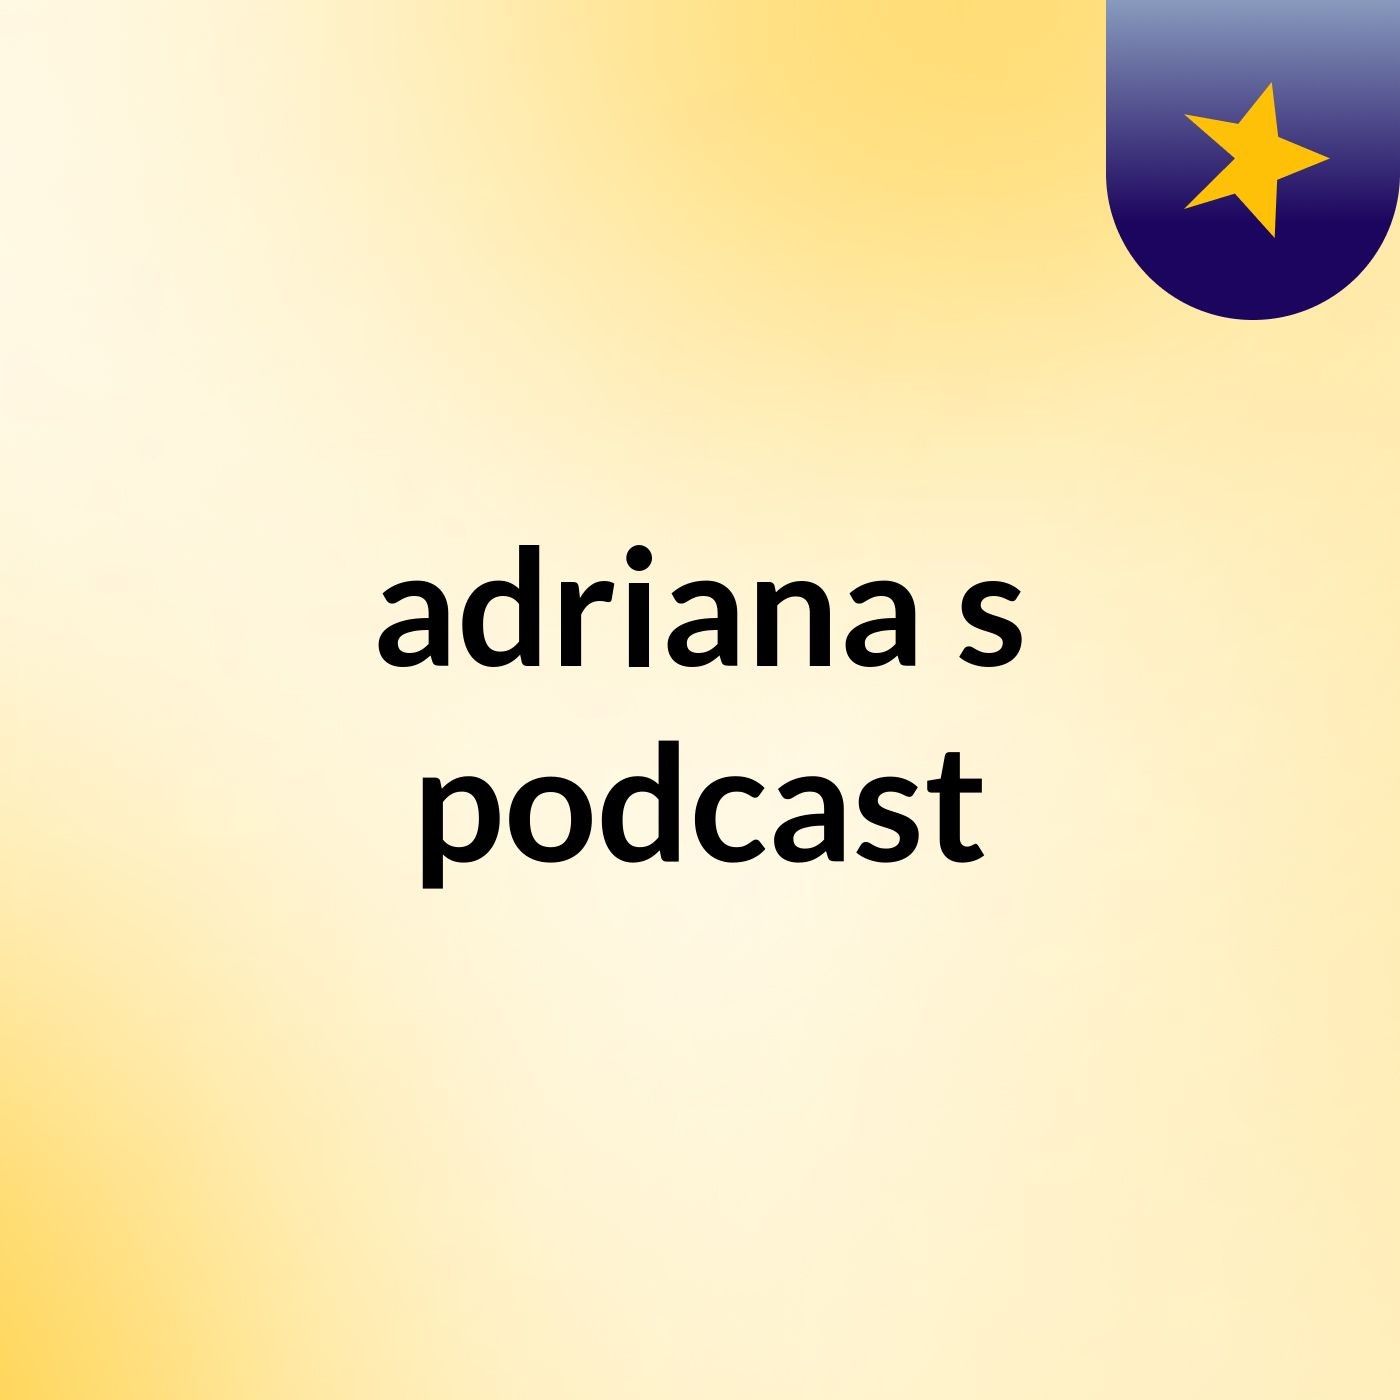 adriana's podcast